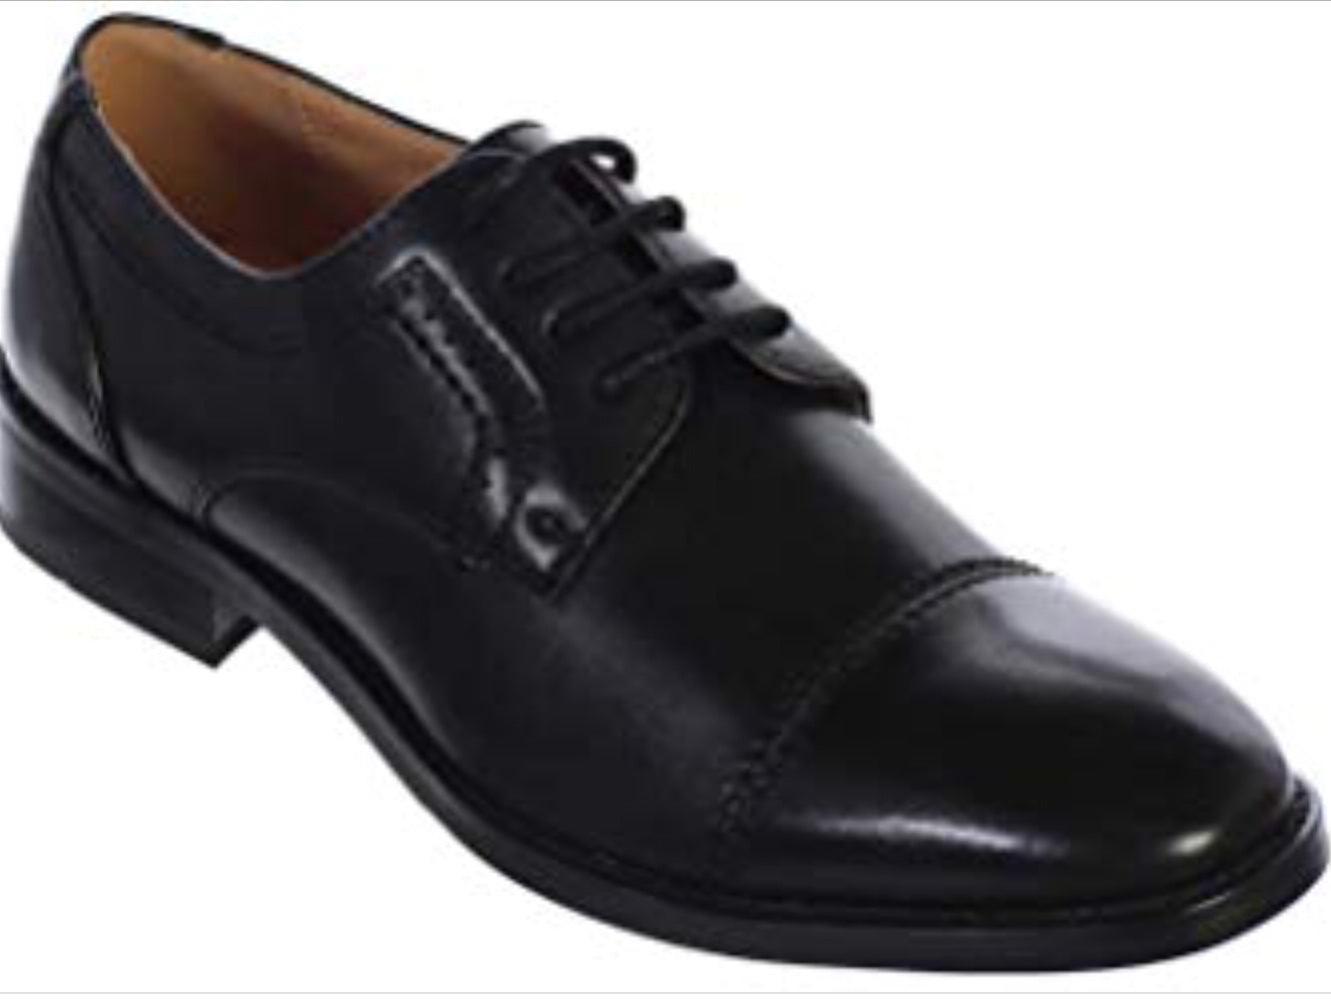 TS131BK boy black leather shoes-Nenes Lullaby Boutique Inc-Nenes Lullaby Boutique Inc